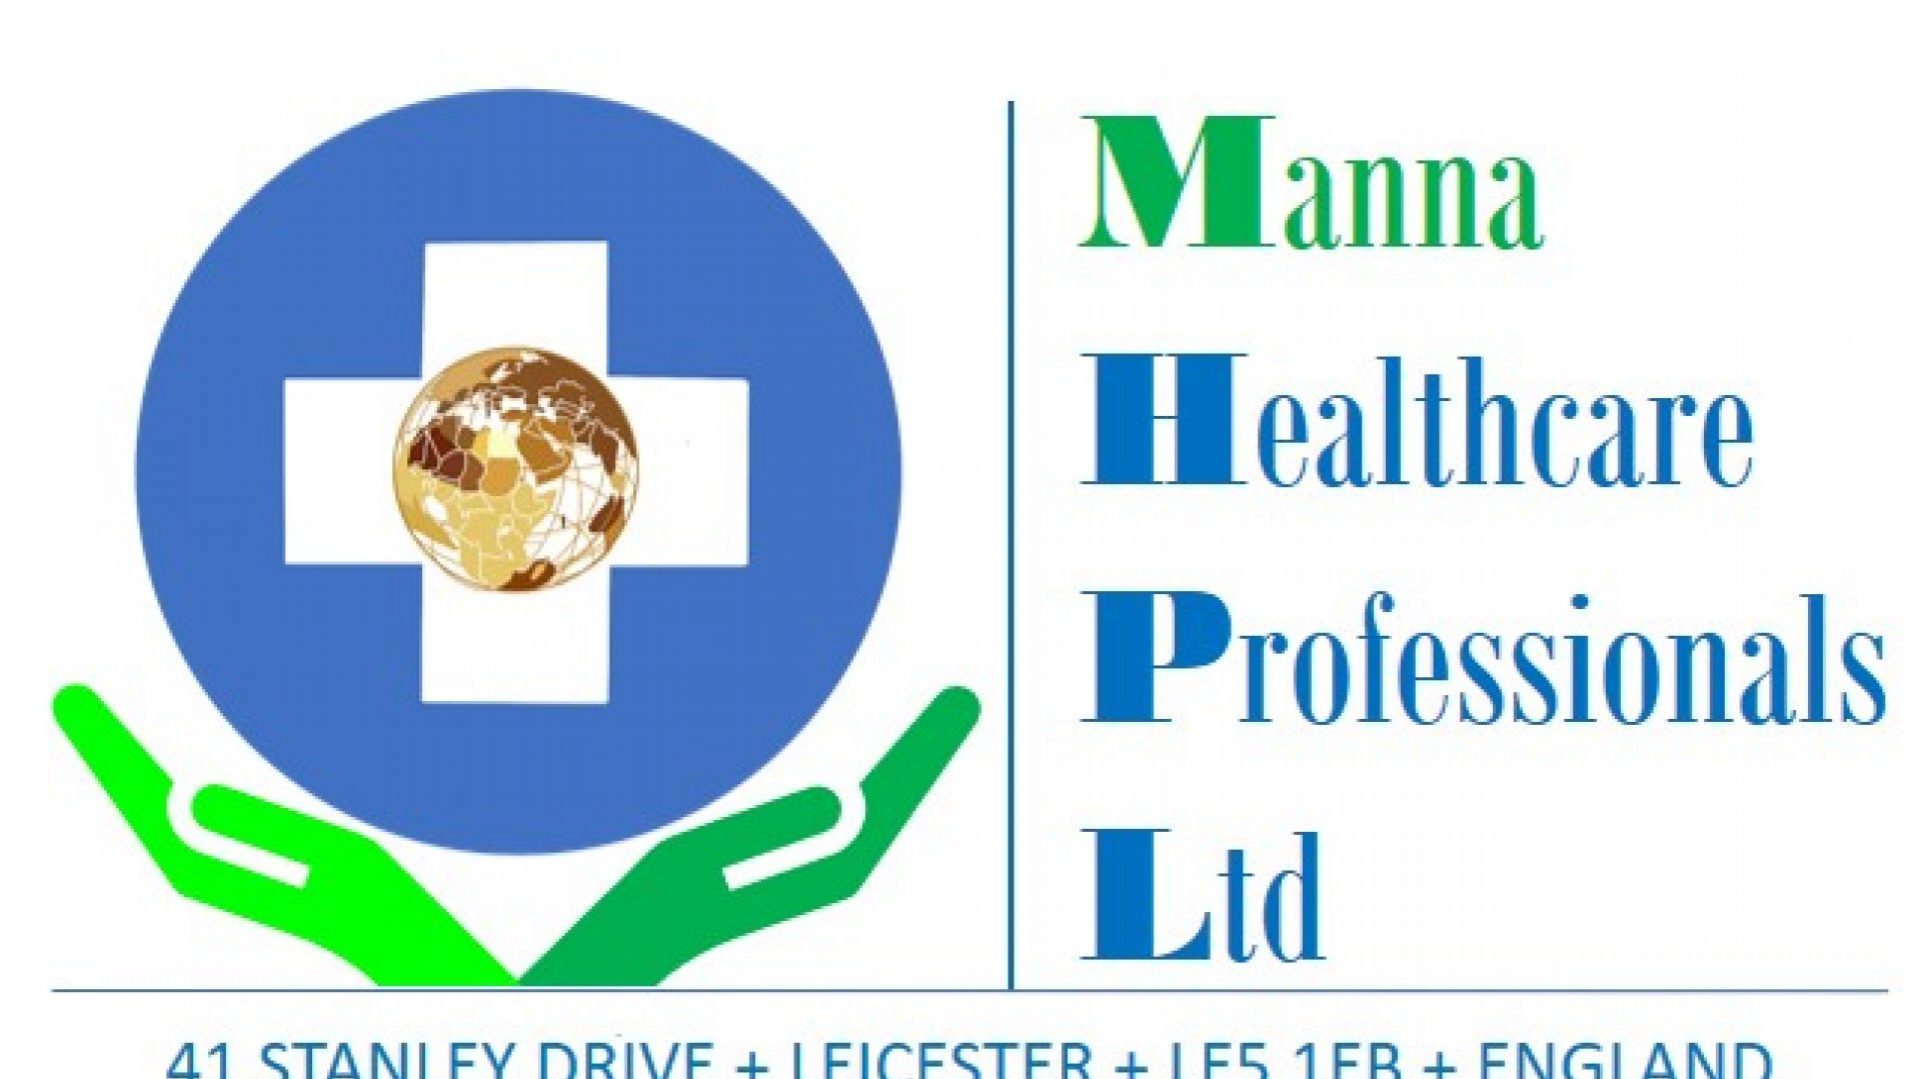 MANNA HEALTHCARE PROFESSIONALS